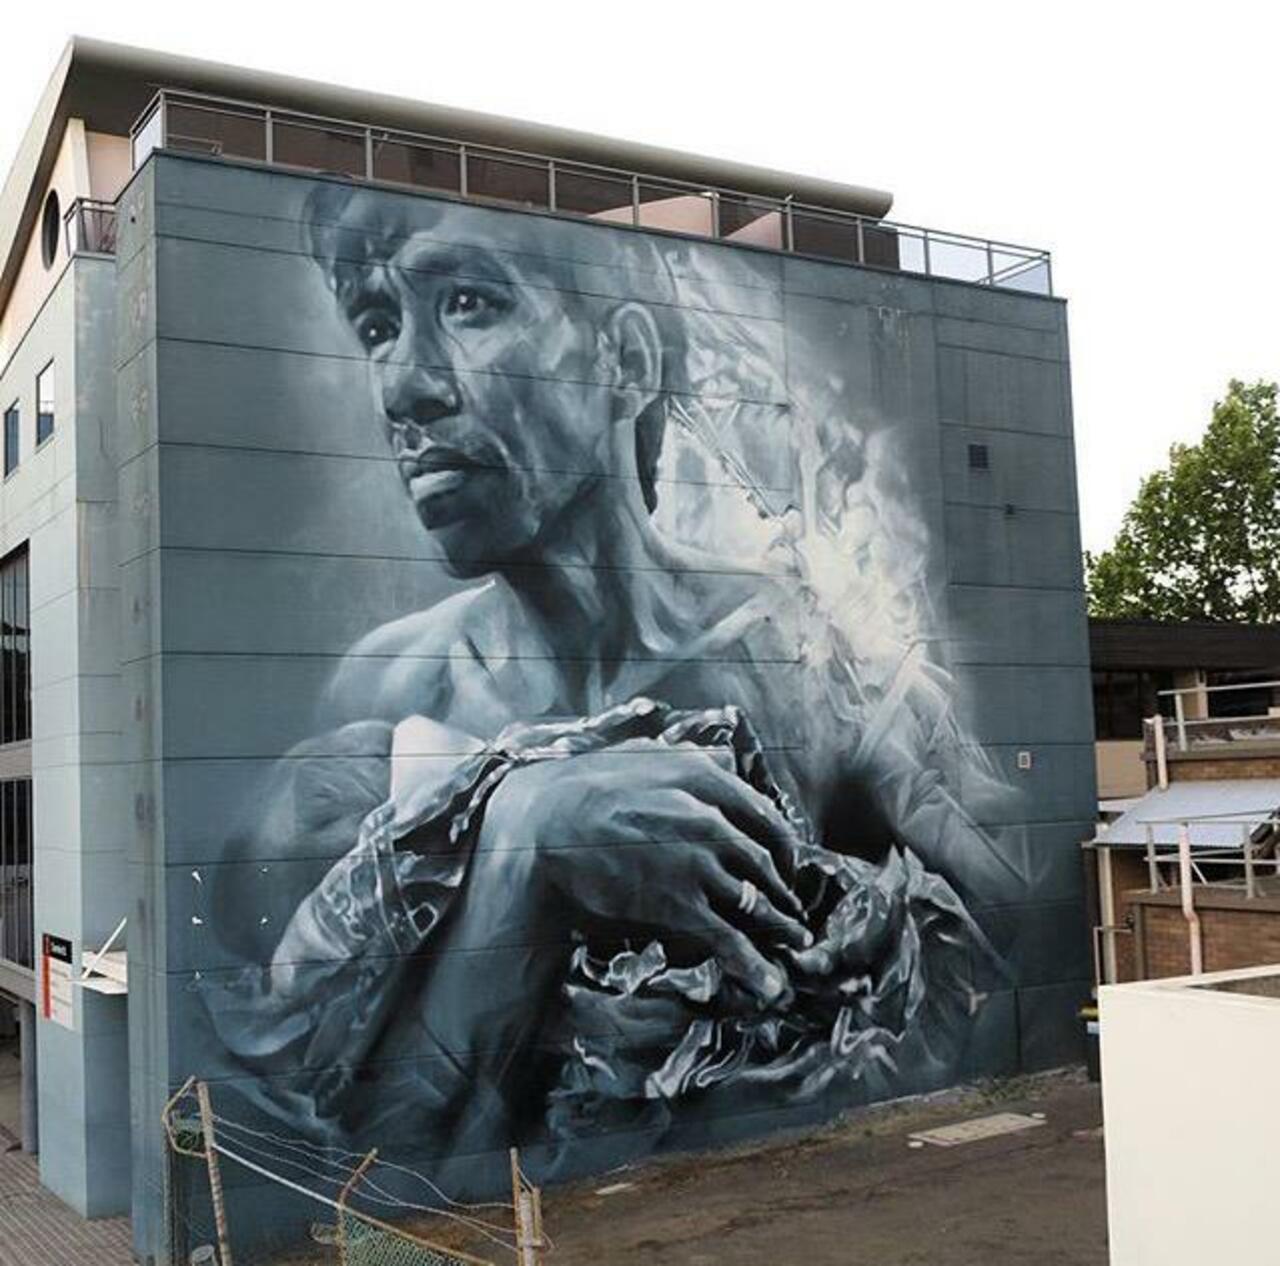 New Street Art by Guido Van Helten in Wollongong Australia 

#art #graffiti #mural #streetart http://t.co/zuXPLwBO3z